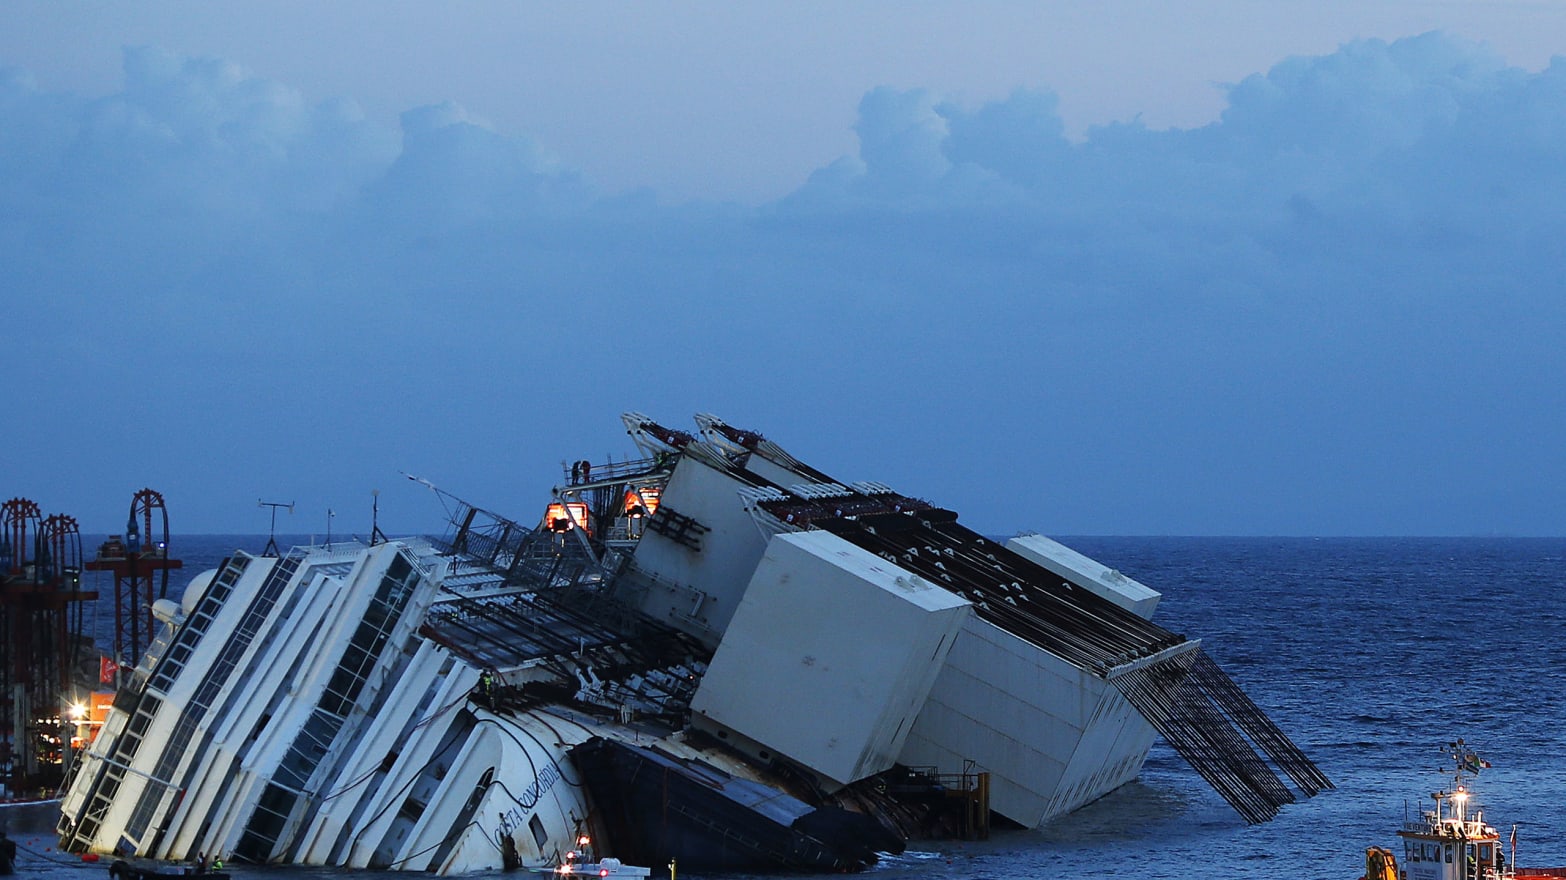 I Survived A Deadly Shipwreck Costa Concordia Passengers